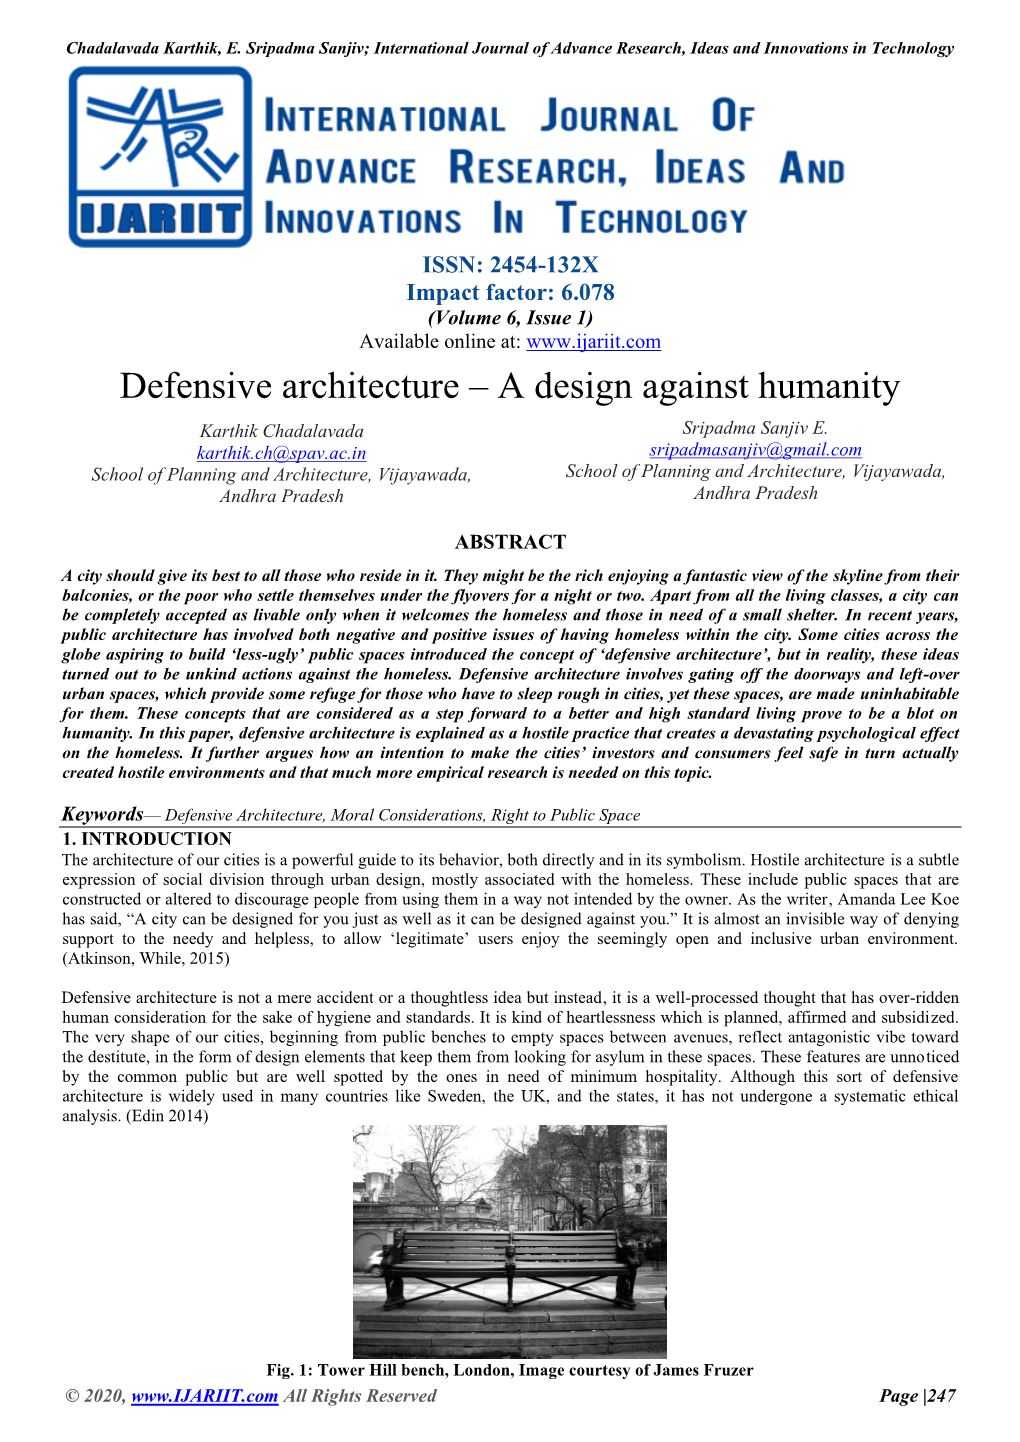 Defensive Architecture – a Design Against Humanity Karthik Chadalavada Sripadma Sanjiv E